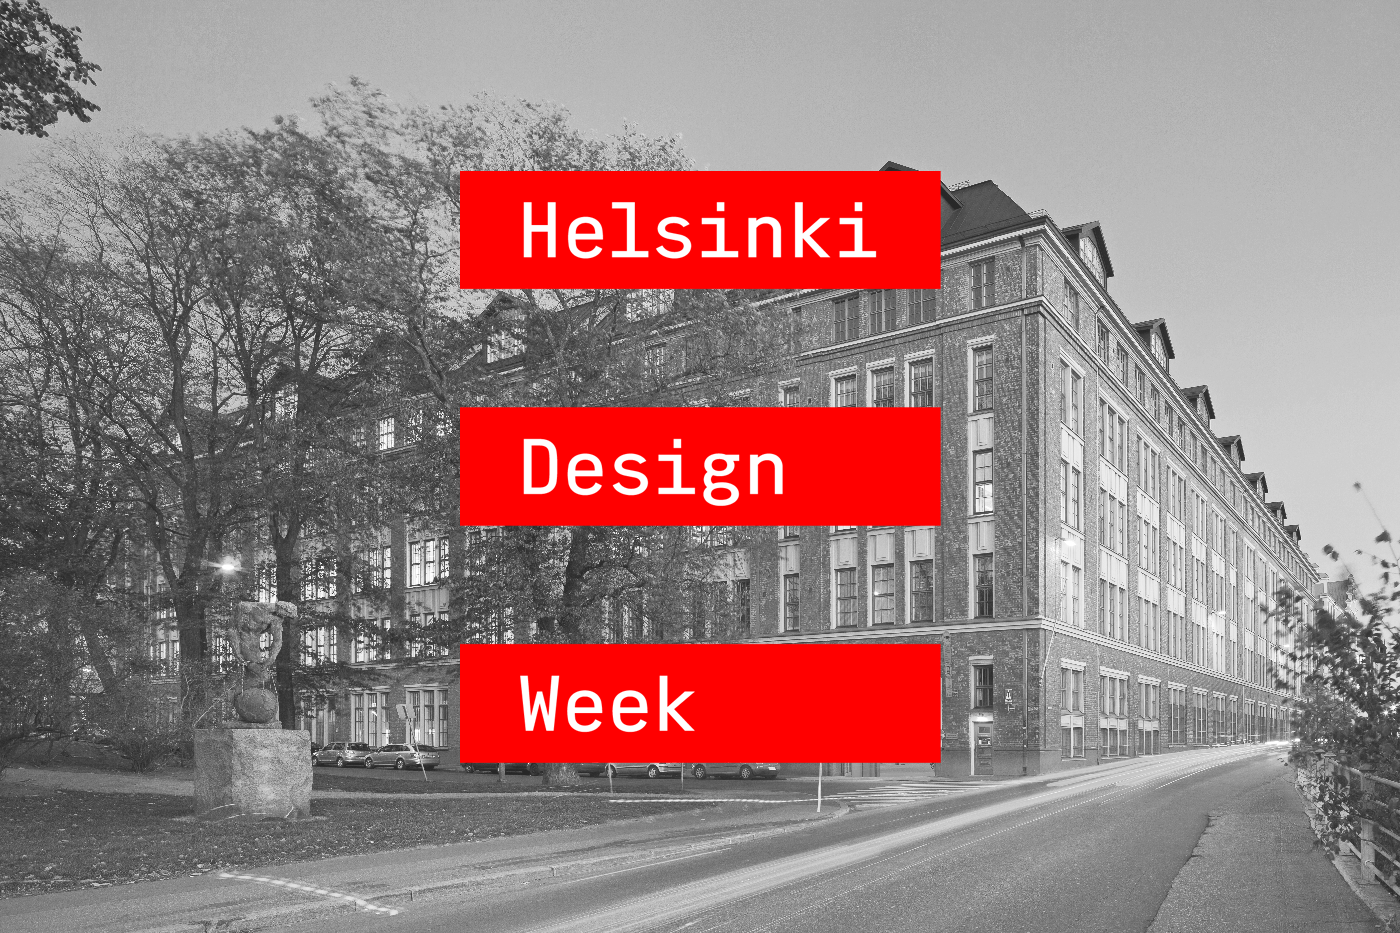 Join us for the Helsinki Design Week!